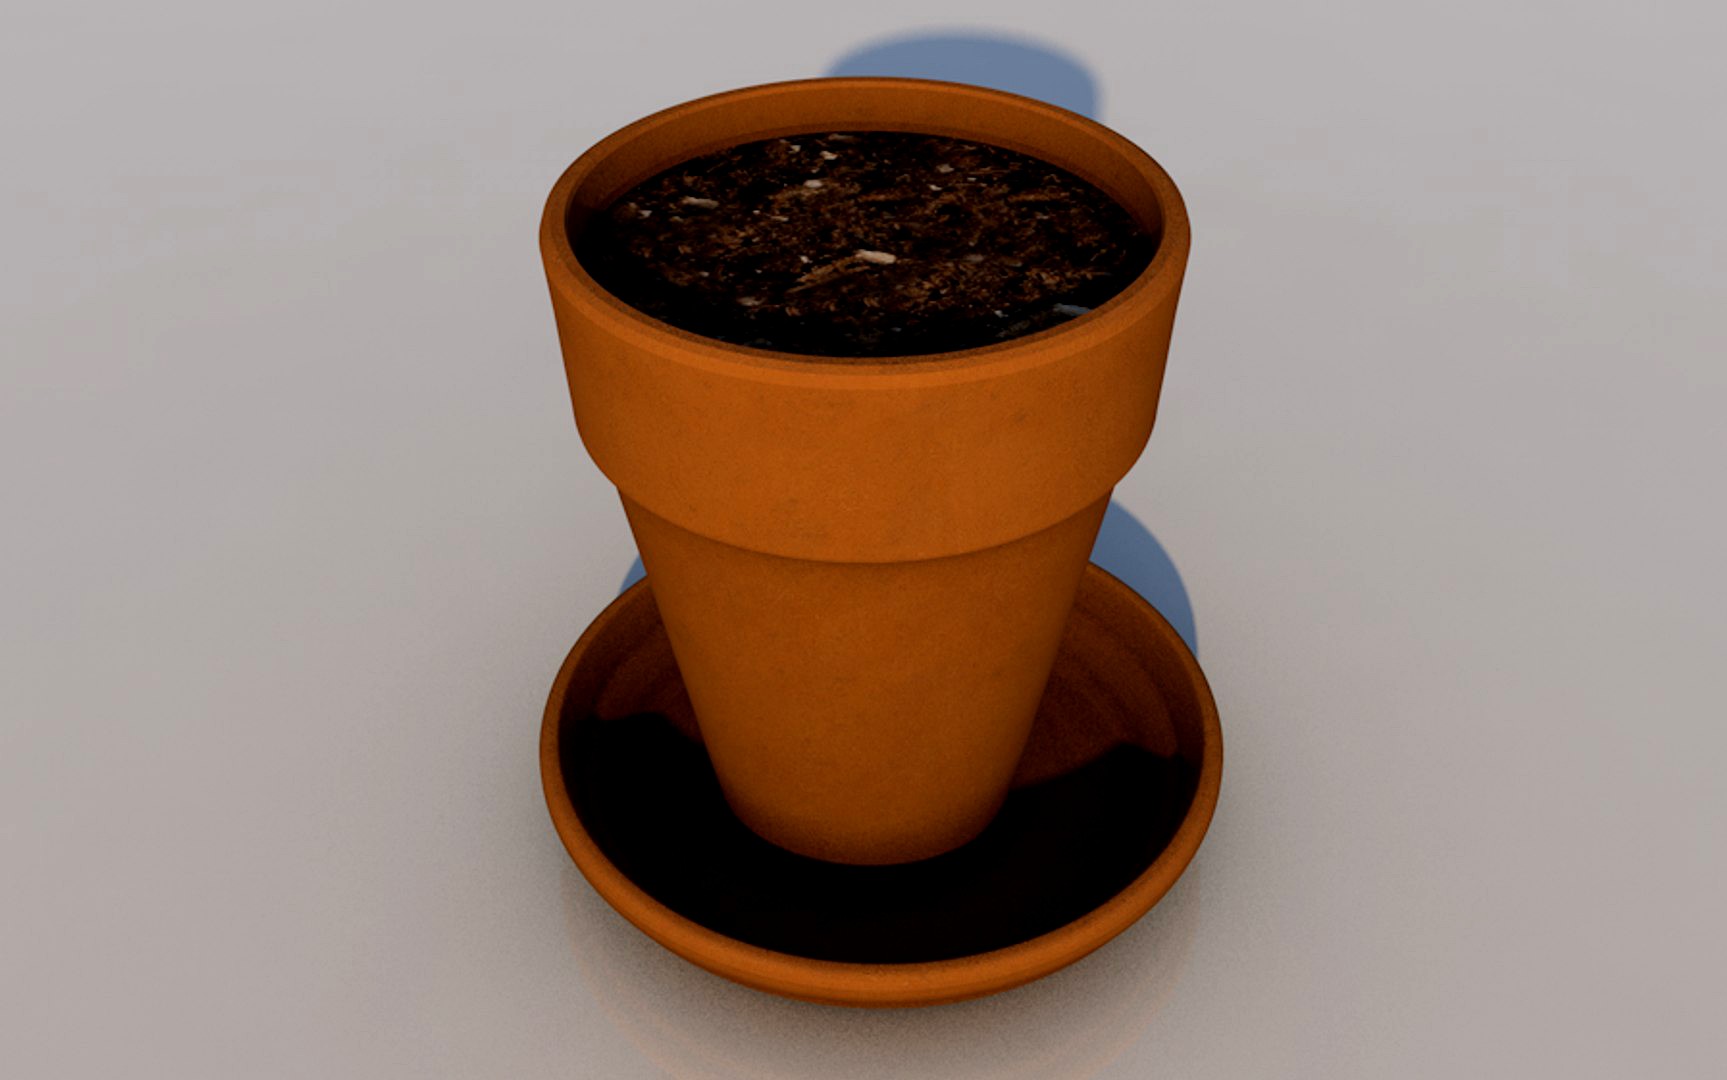 Pot with Soil